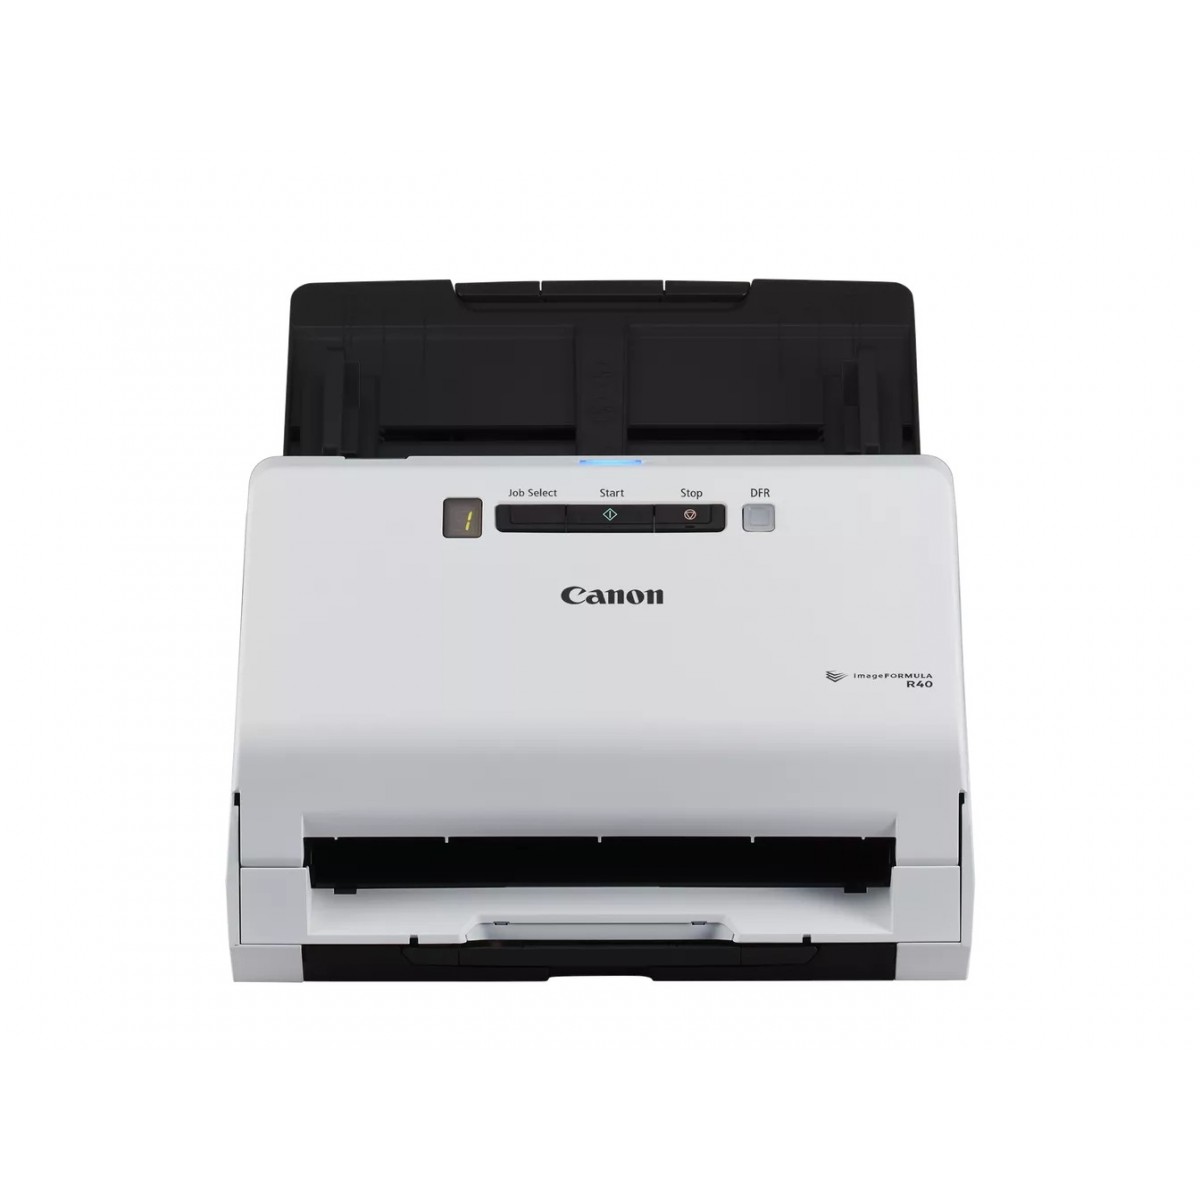 Canon Scanner imageFORMULA R40 - Document Scanners - Scanner